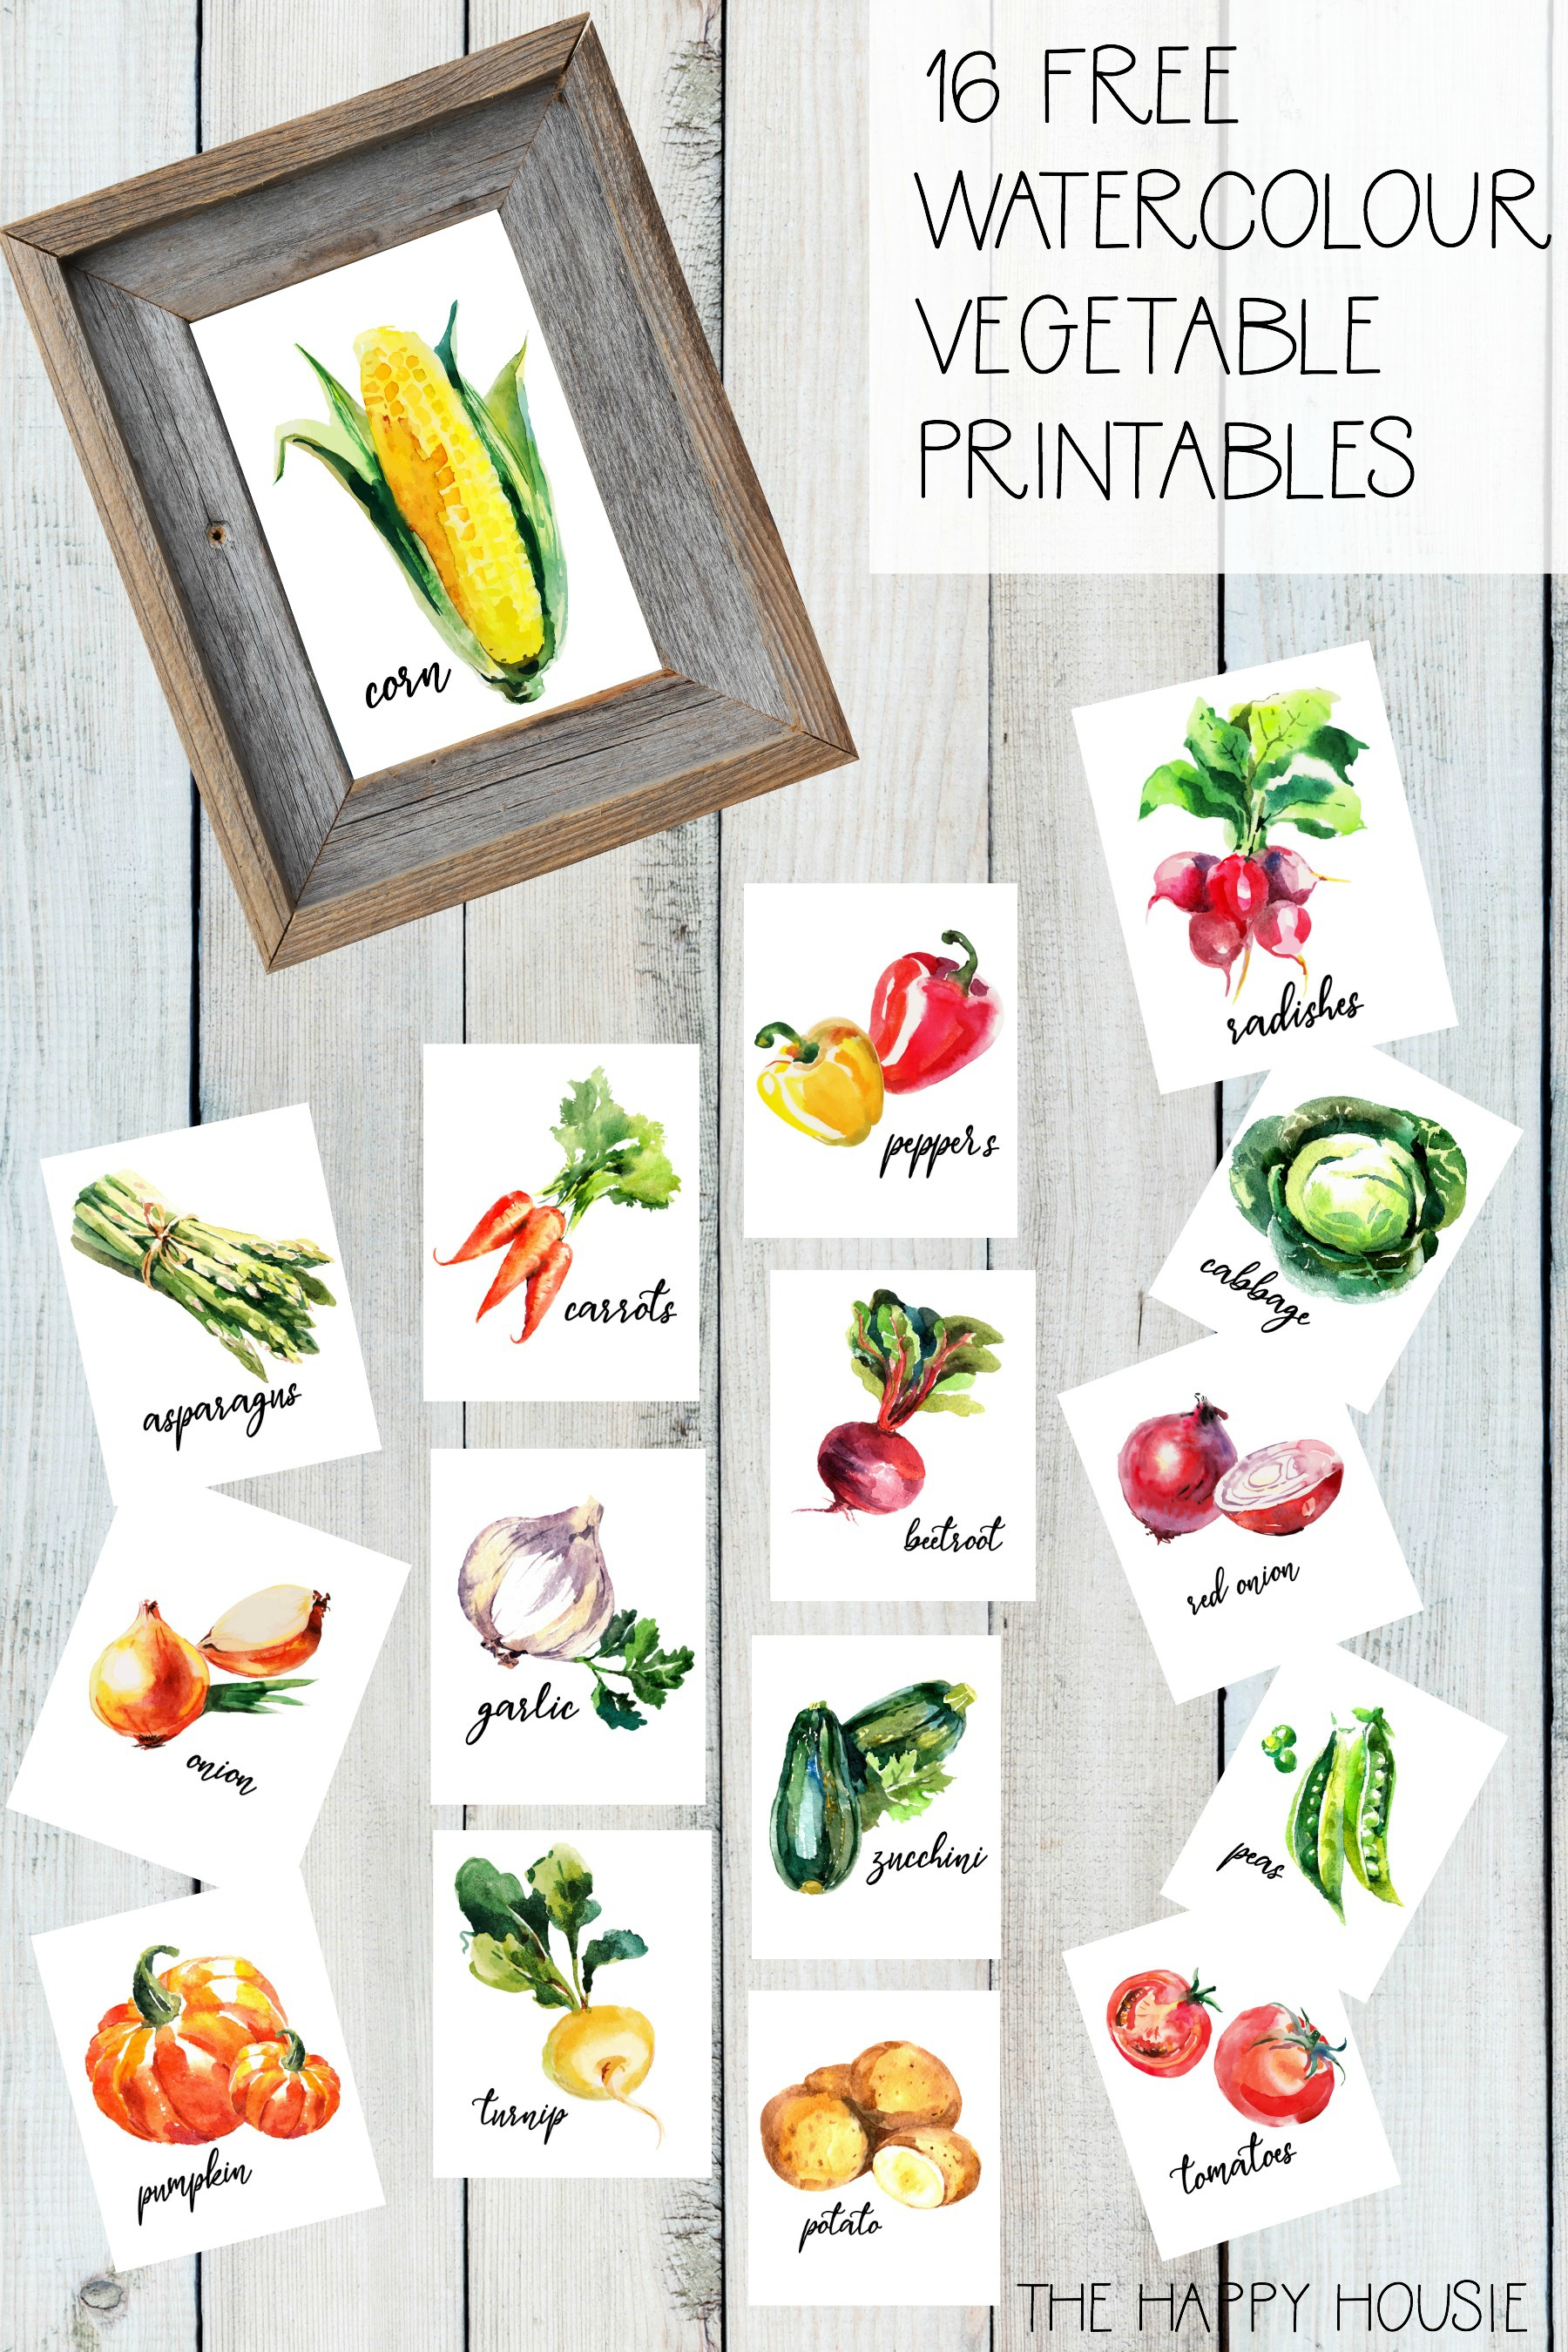 16 Free Watercolour Vegetable Printables poster.